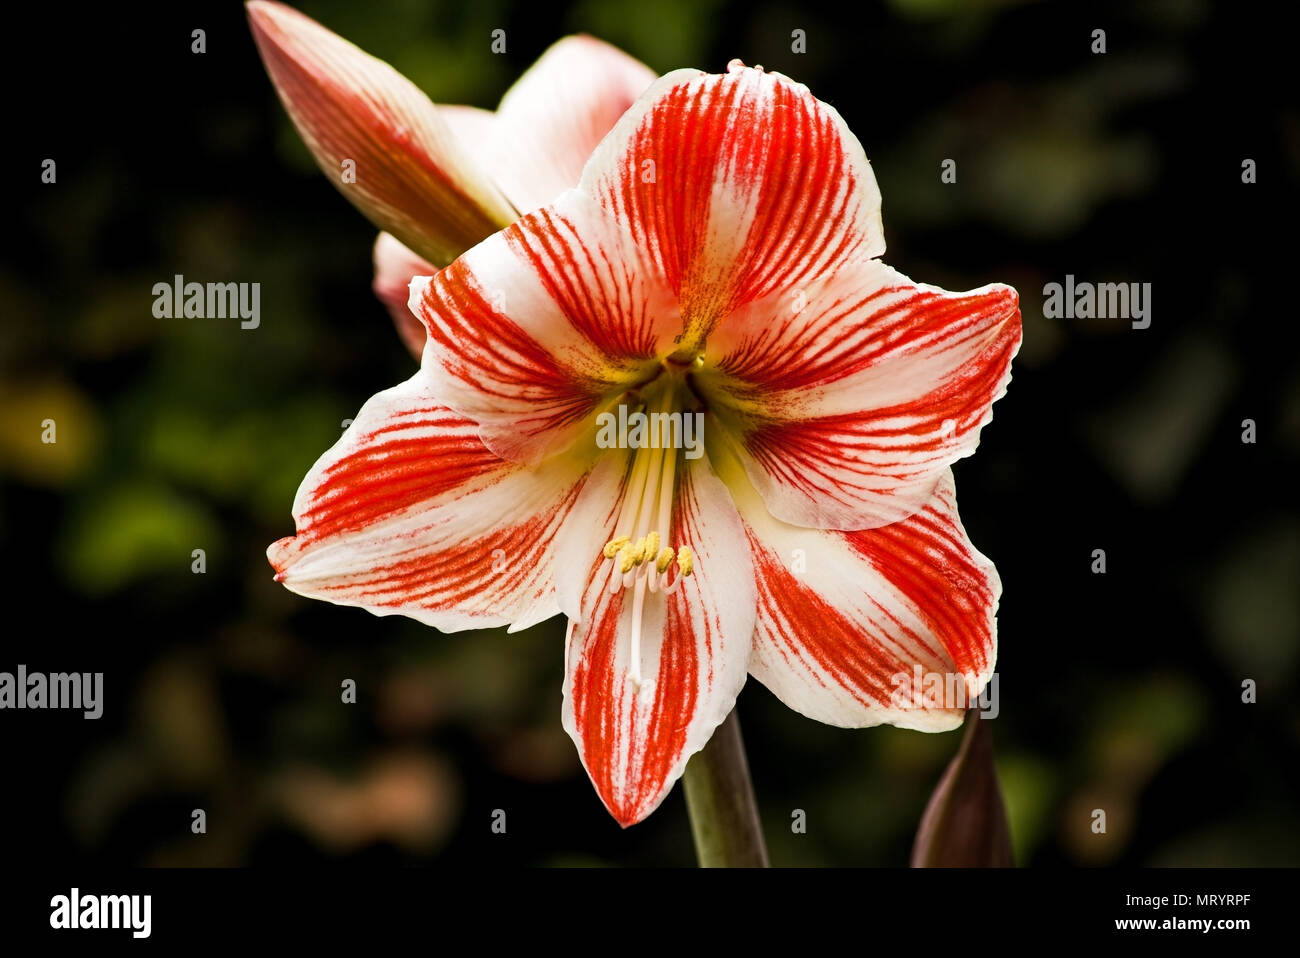 Red and White Amaryllis Flower Stock Photo